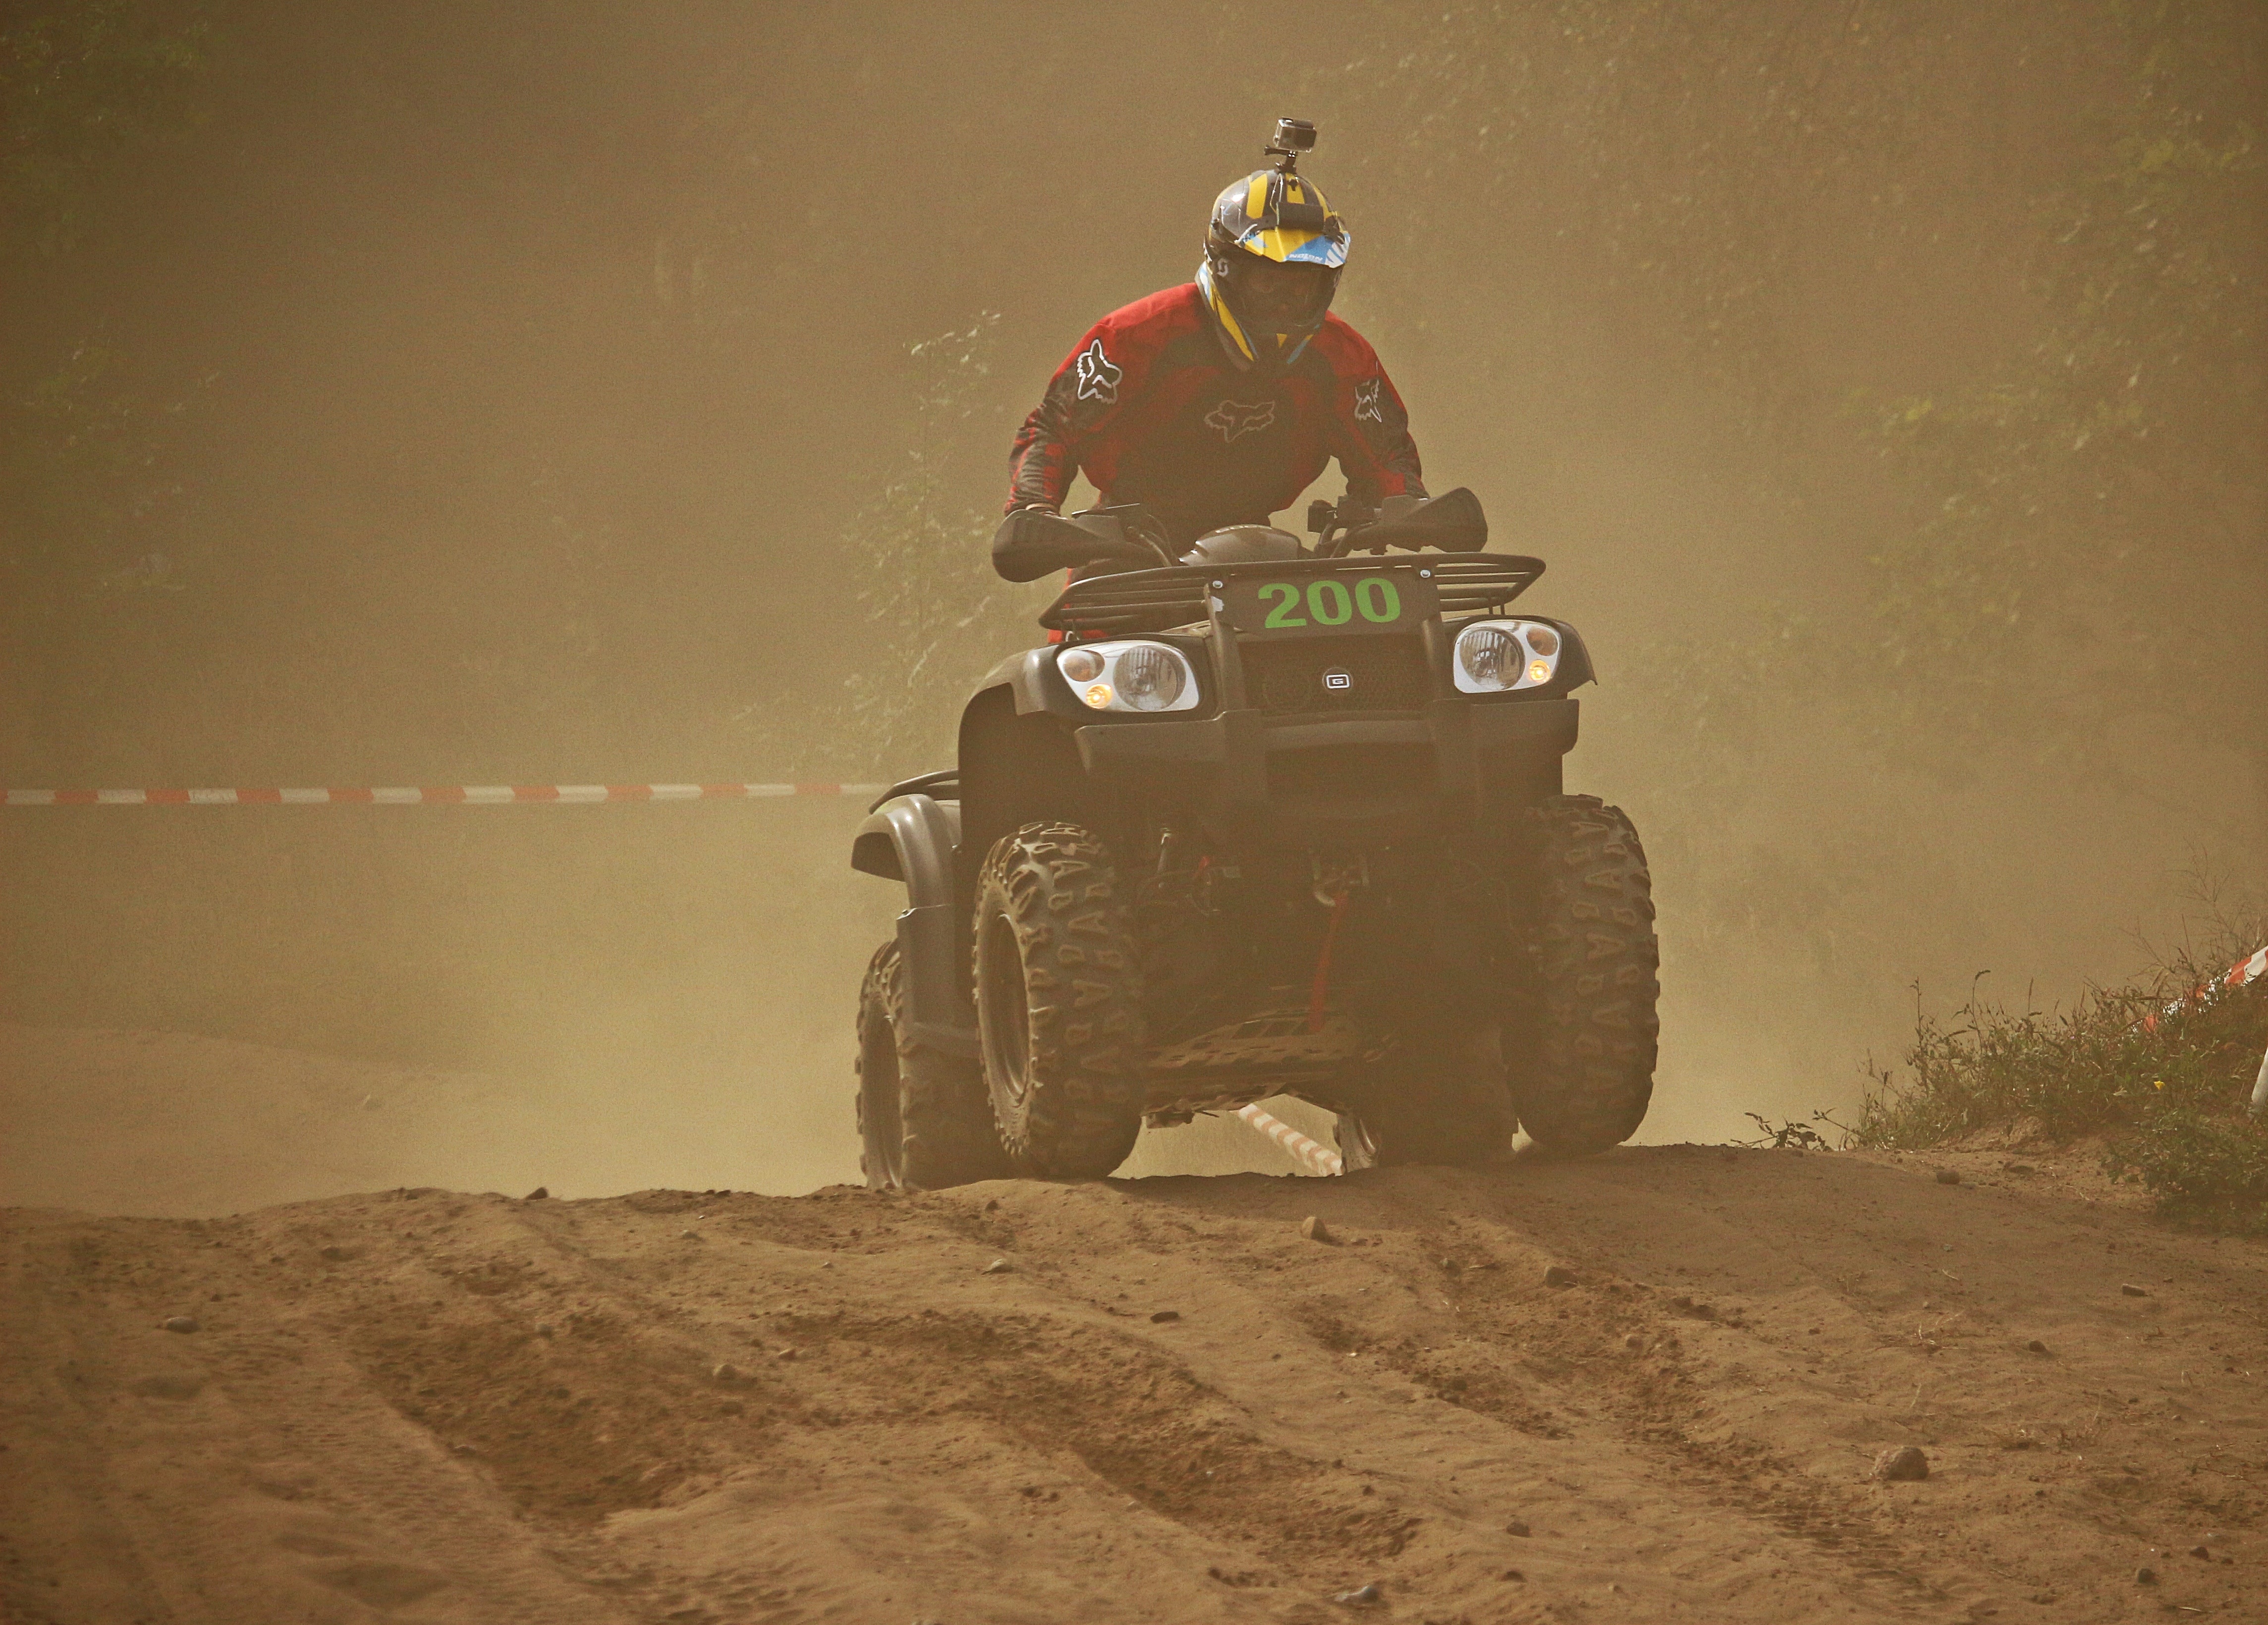 Enduro, Cross, Motocross, Dust, Sand, one man only, adventure